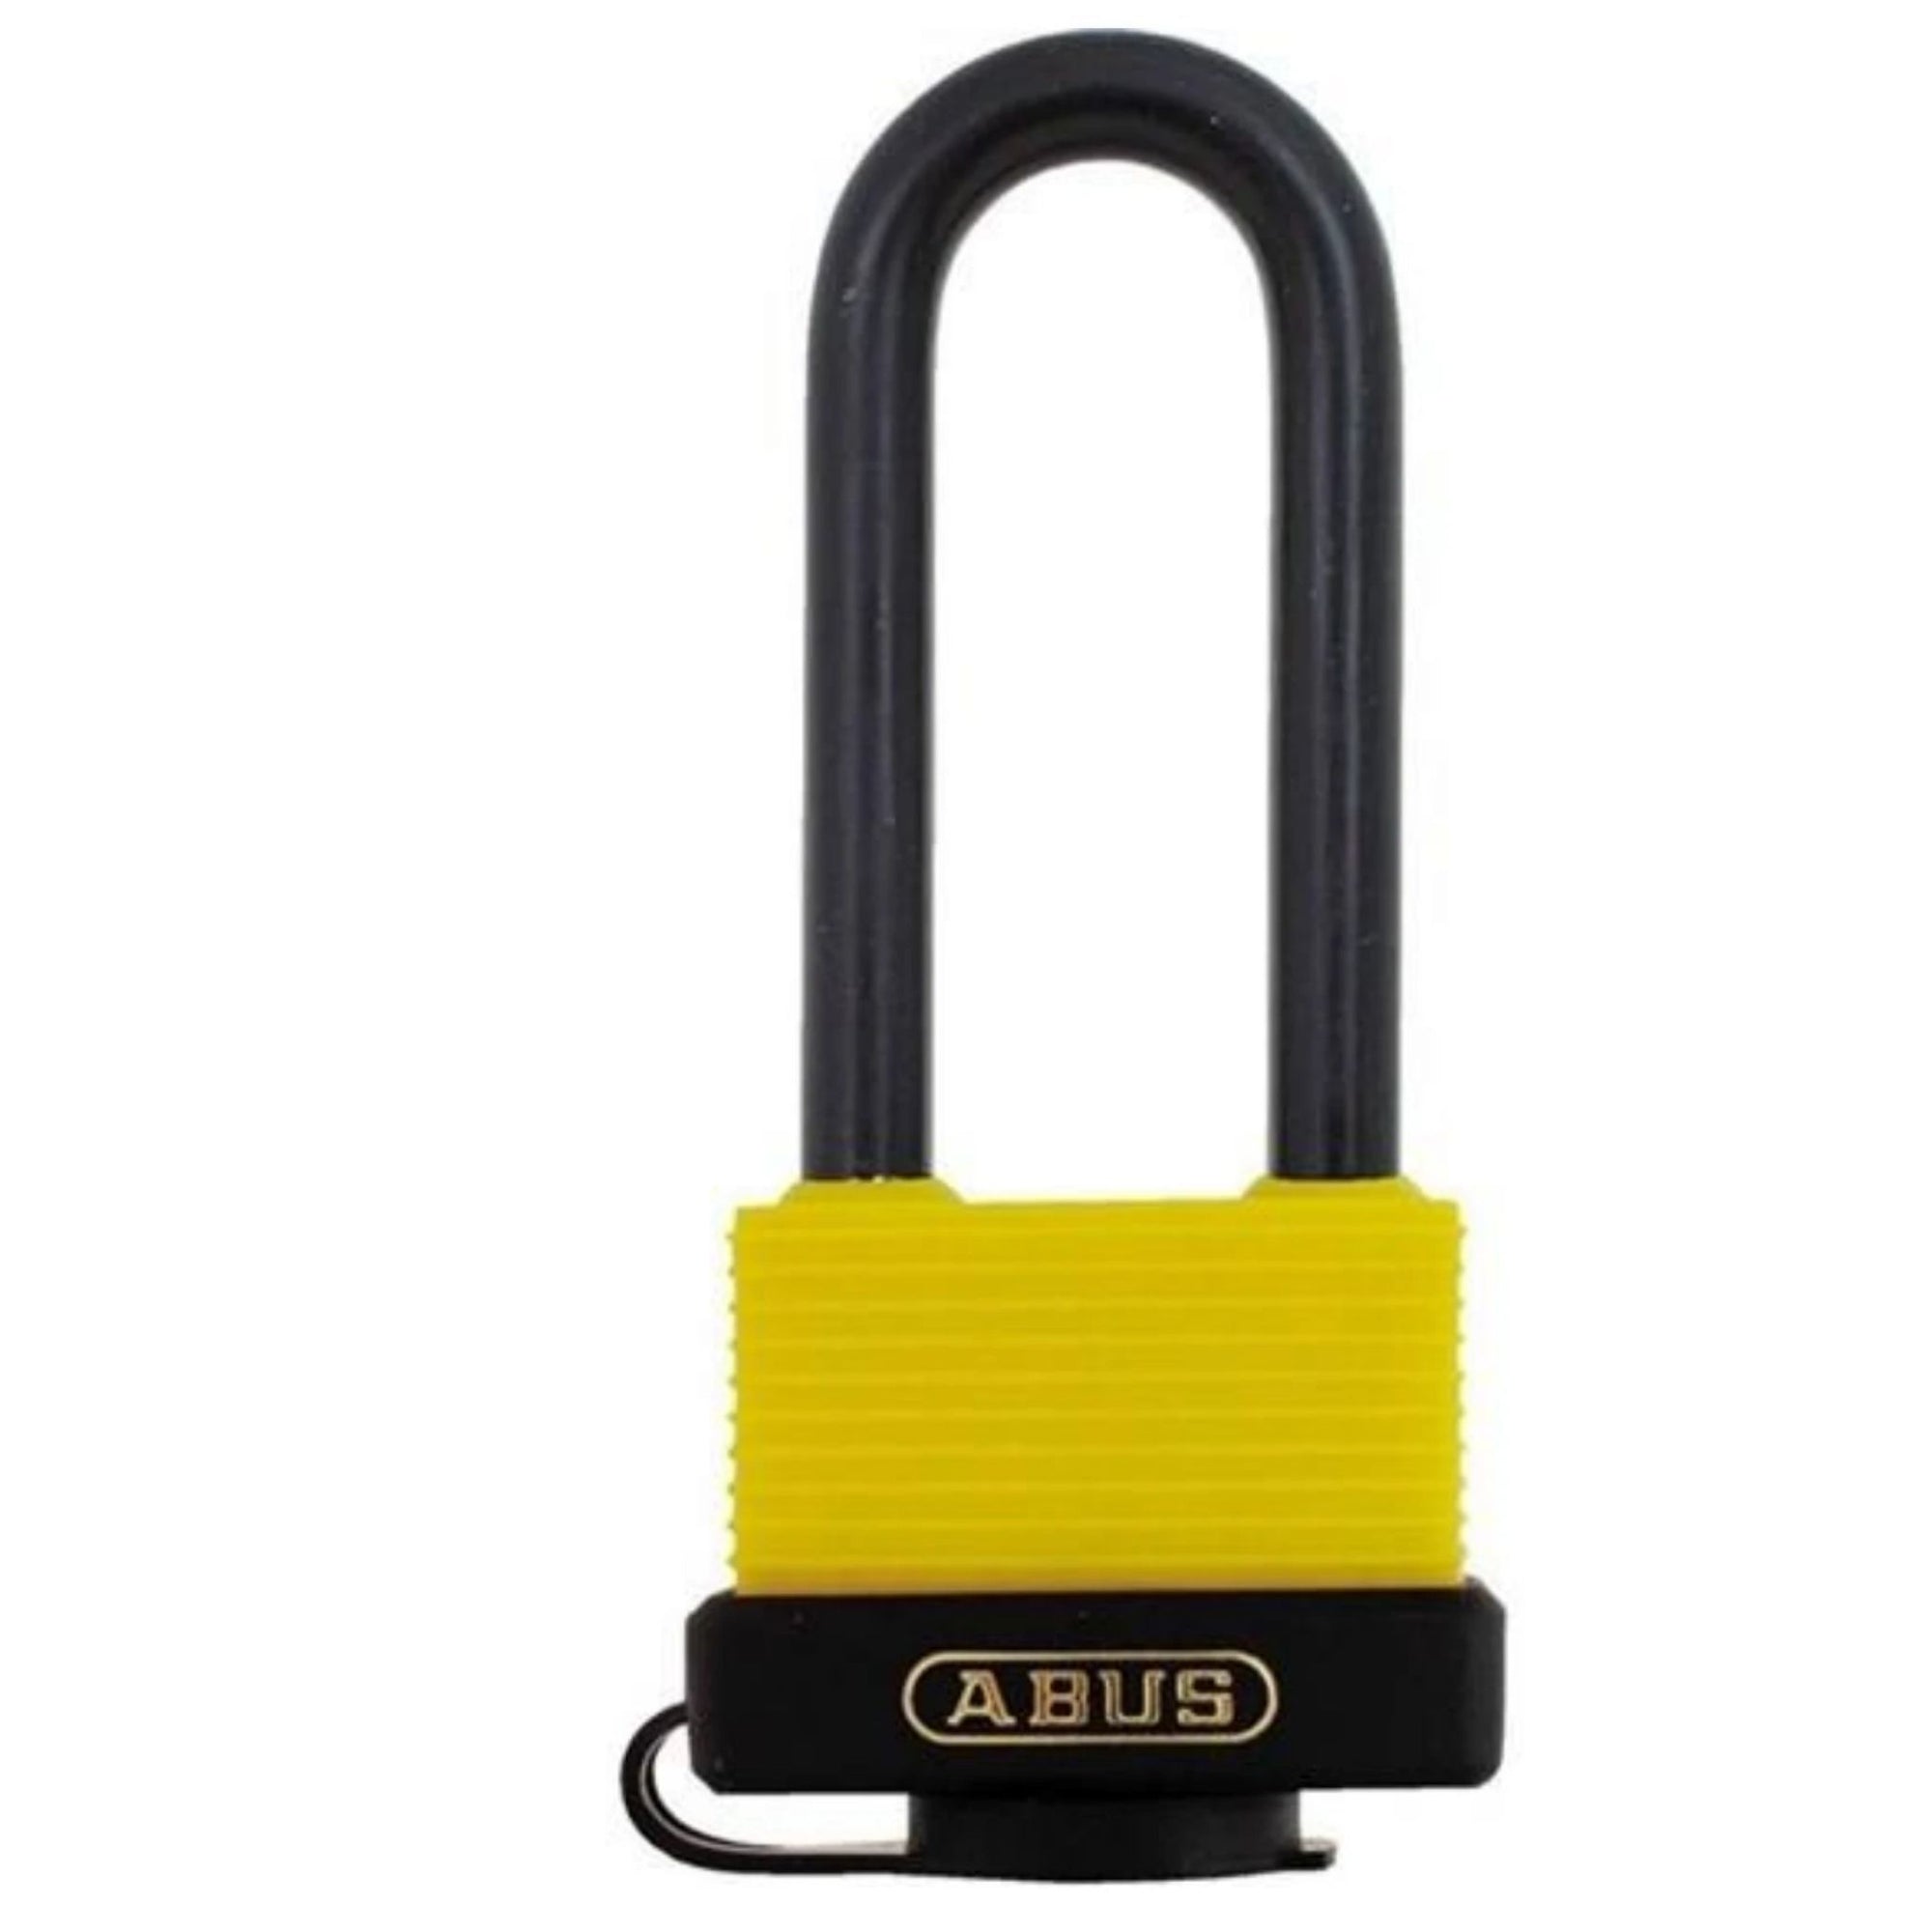 Abus 70/45HB63 KA 6402 Lock Keyed Alike Weatherproof Brass Padlocks with 2.5-Inch Shackle Keyed Alike to Match Key Number KA6402 - The Lock Source